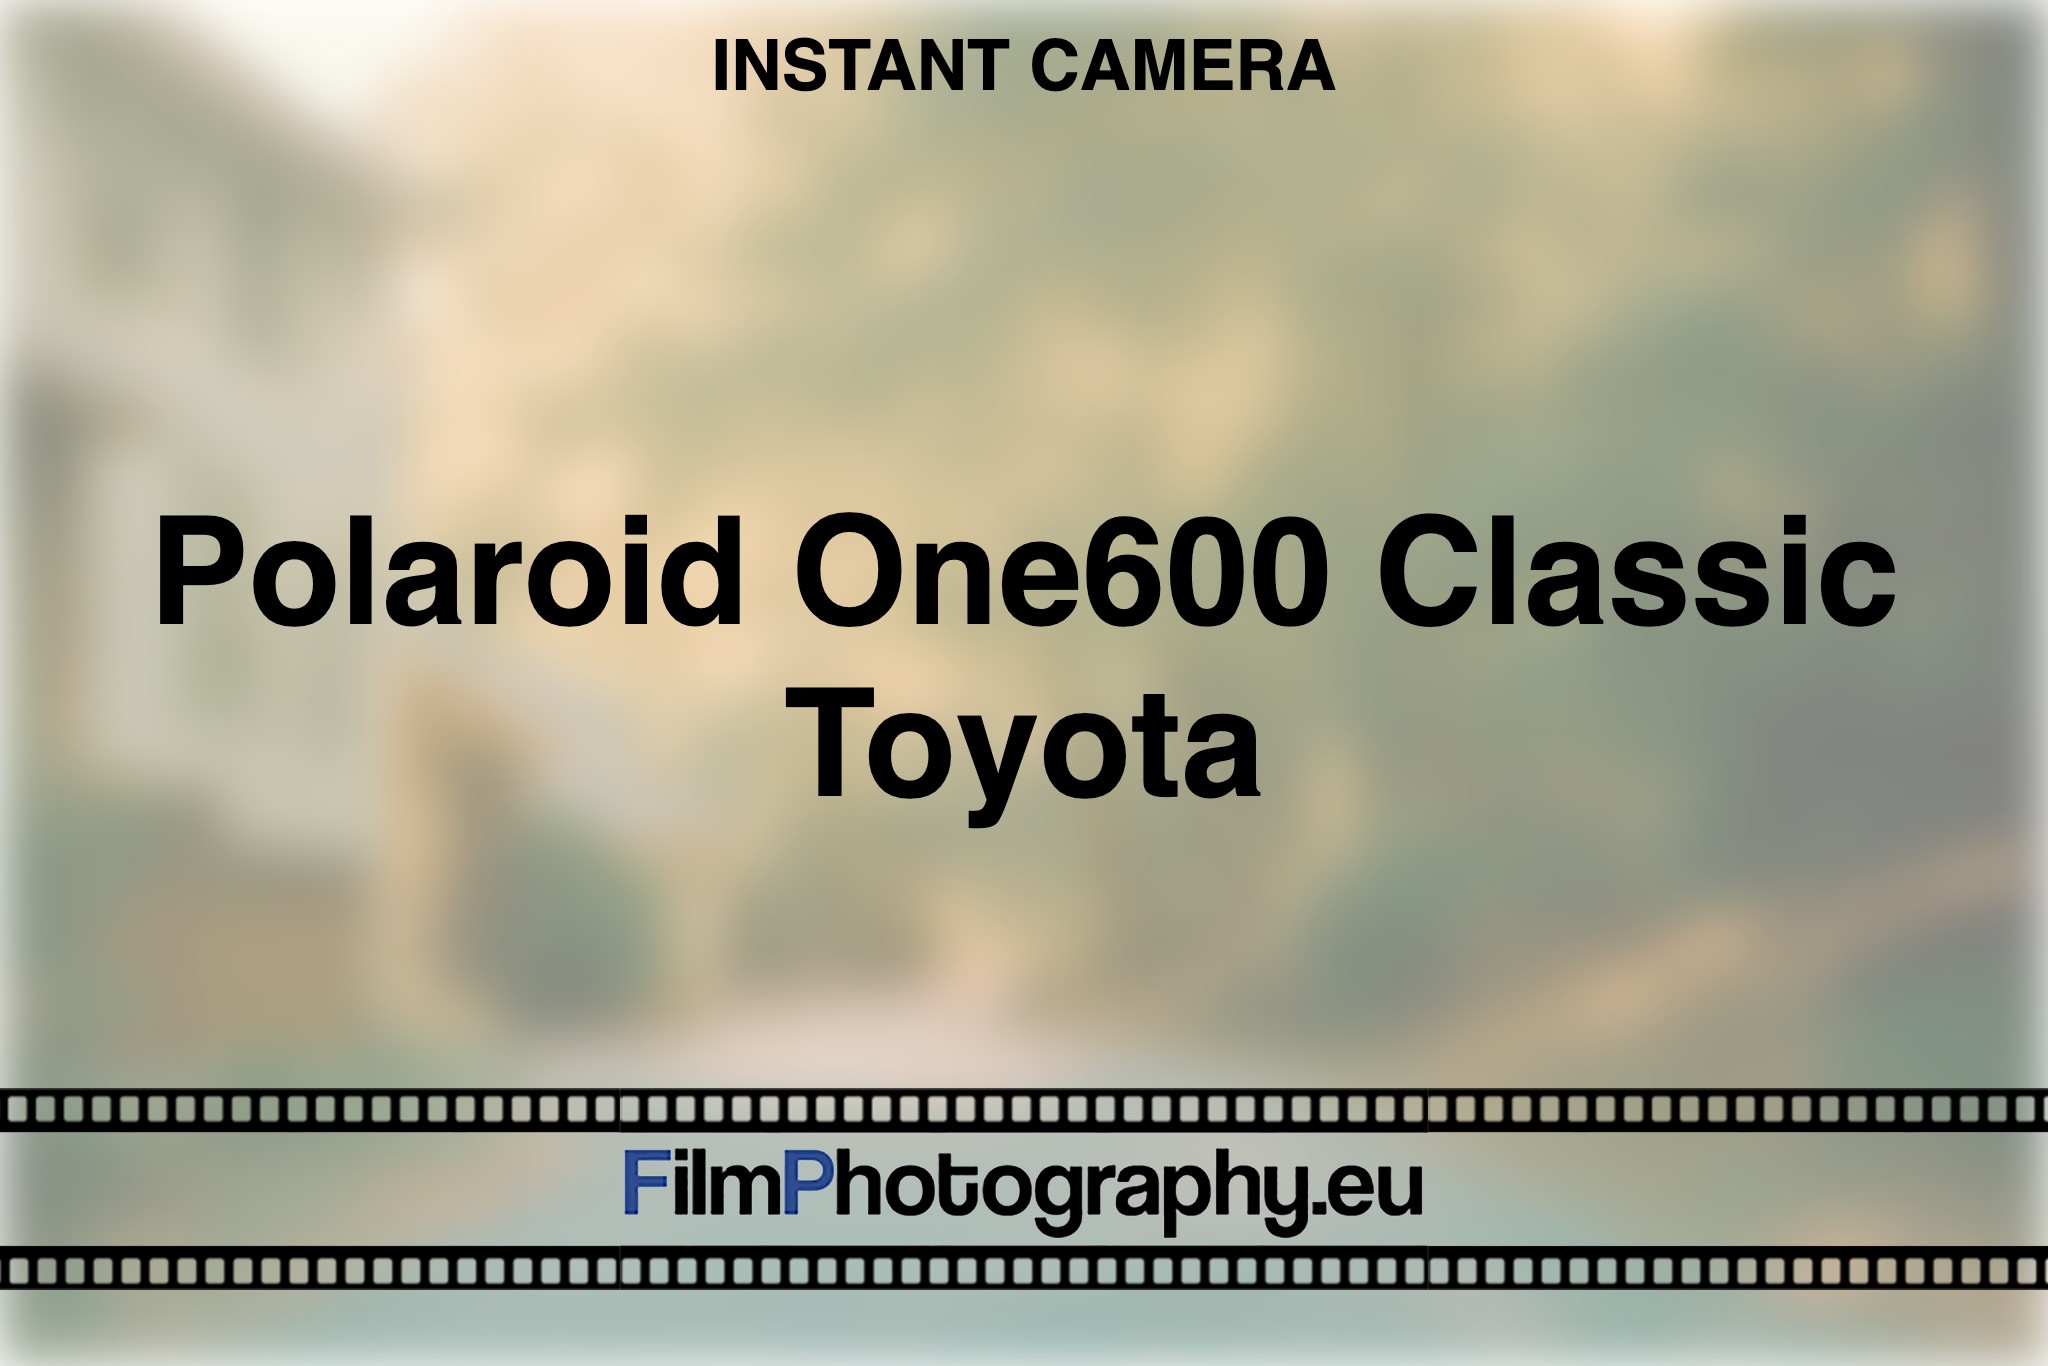 polaroid-one600-classic-toyota-instant-camera-bnv